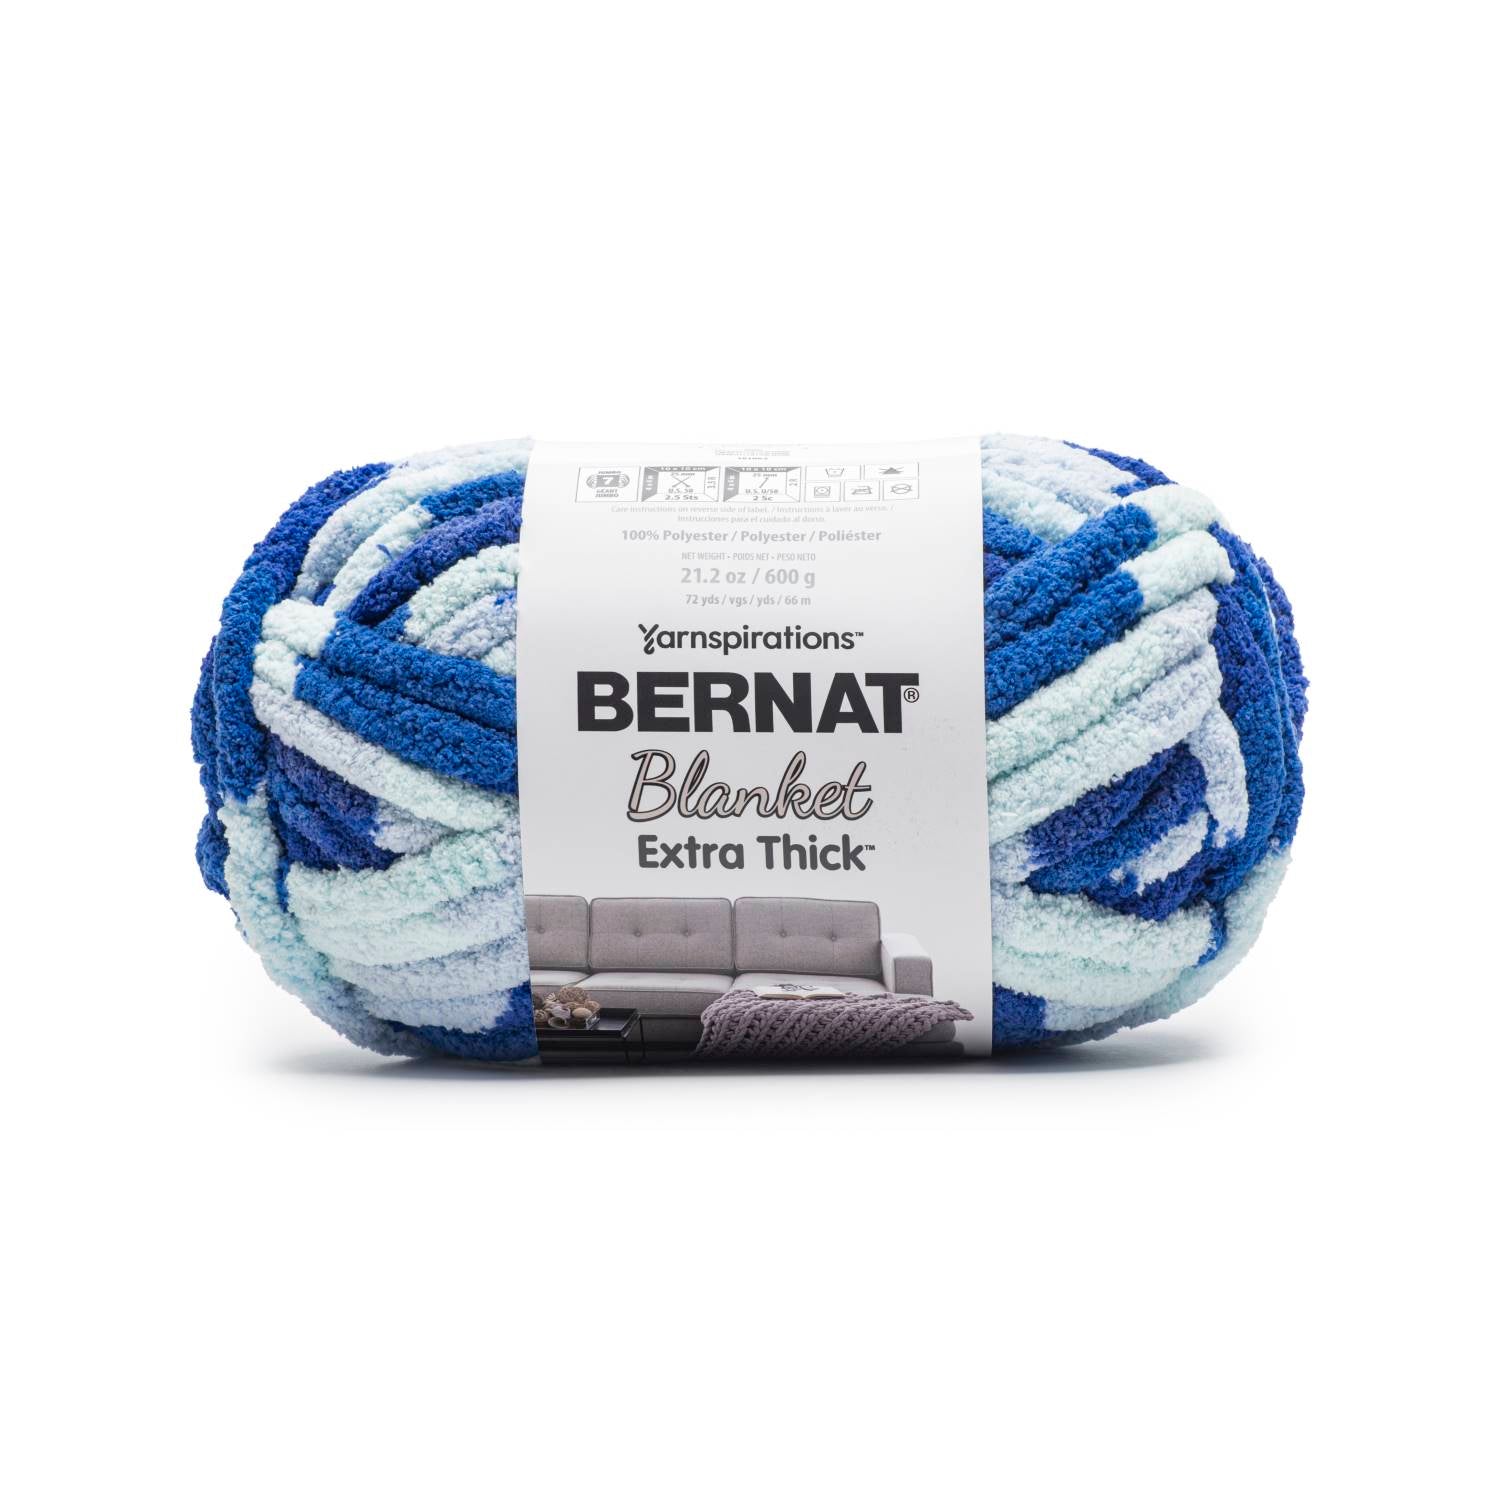 Bernat Blanket Extra Thick Yarn (600g/21.2 oz), Ice